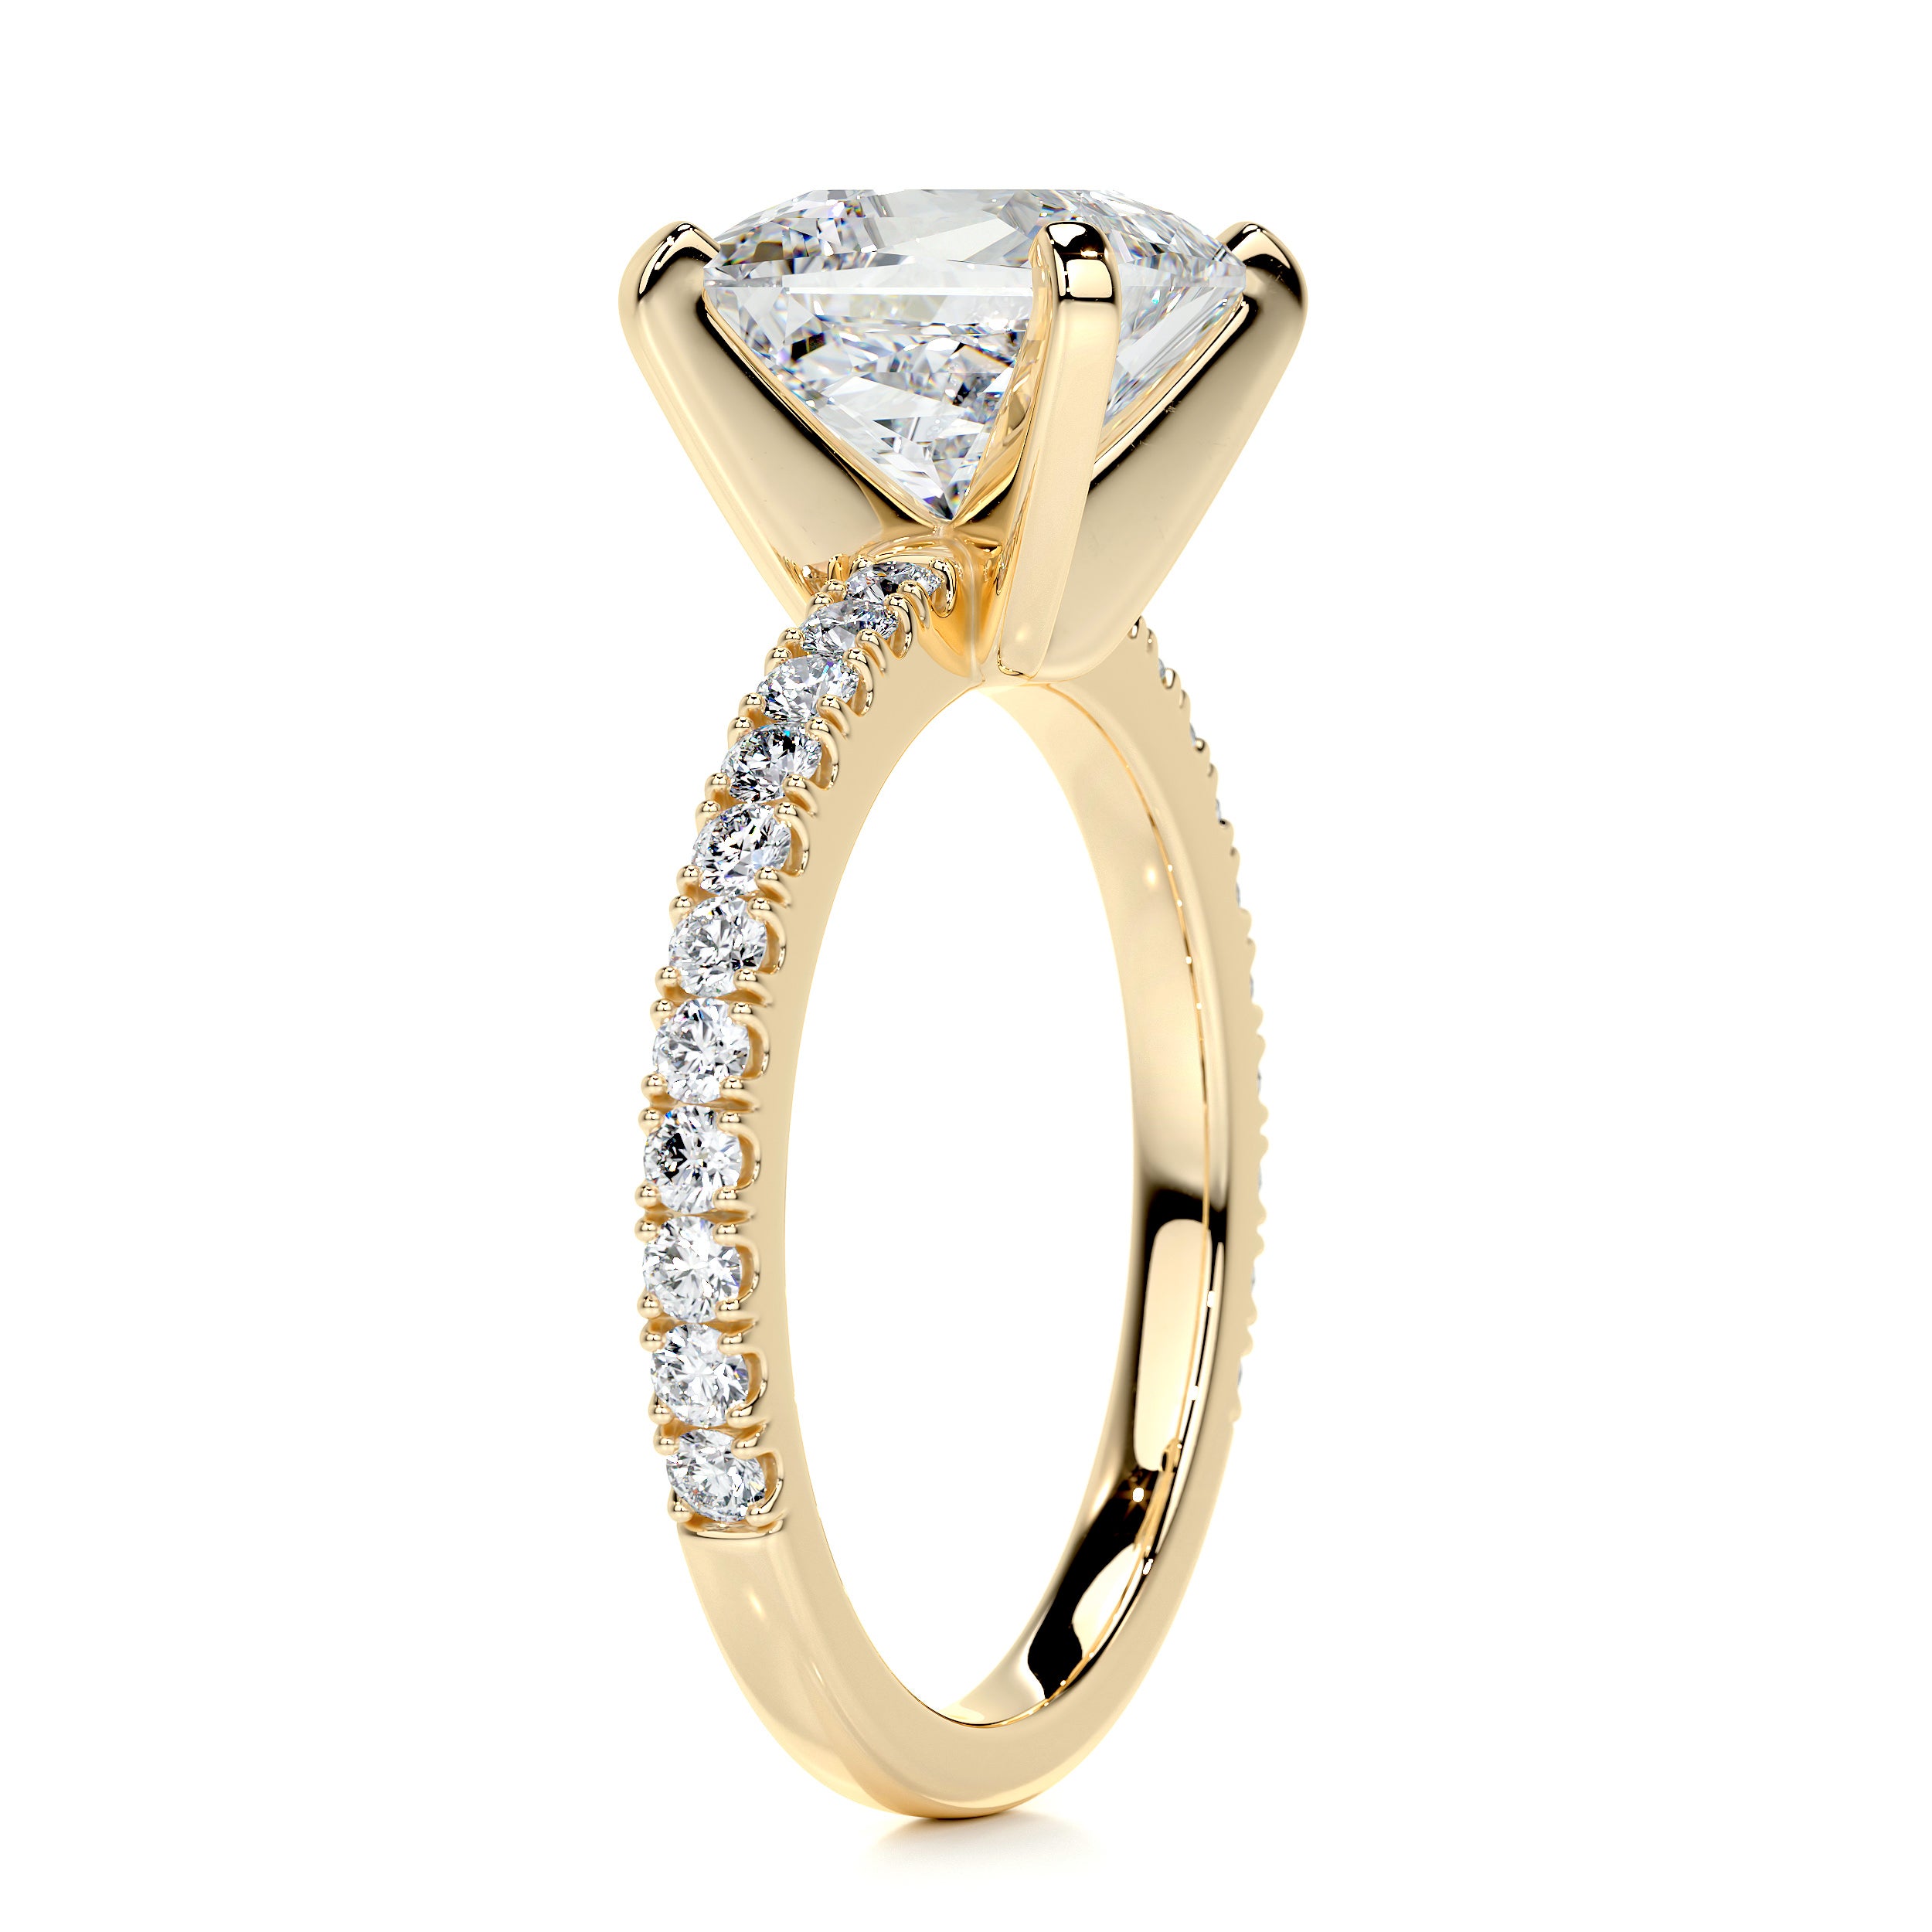 Stephanie Diamond Engagement Ring   (2.8 Carat) -18K Yellow Gold